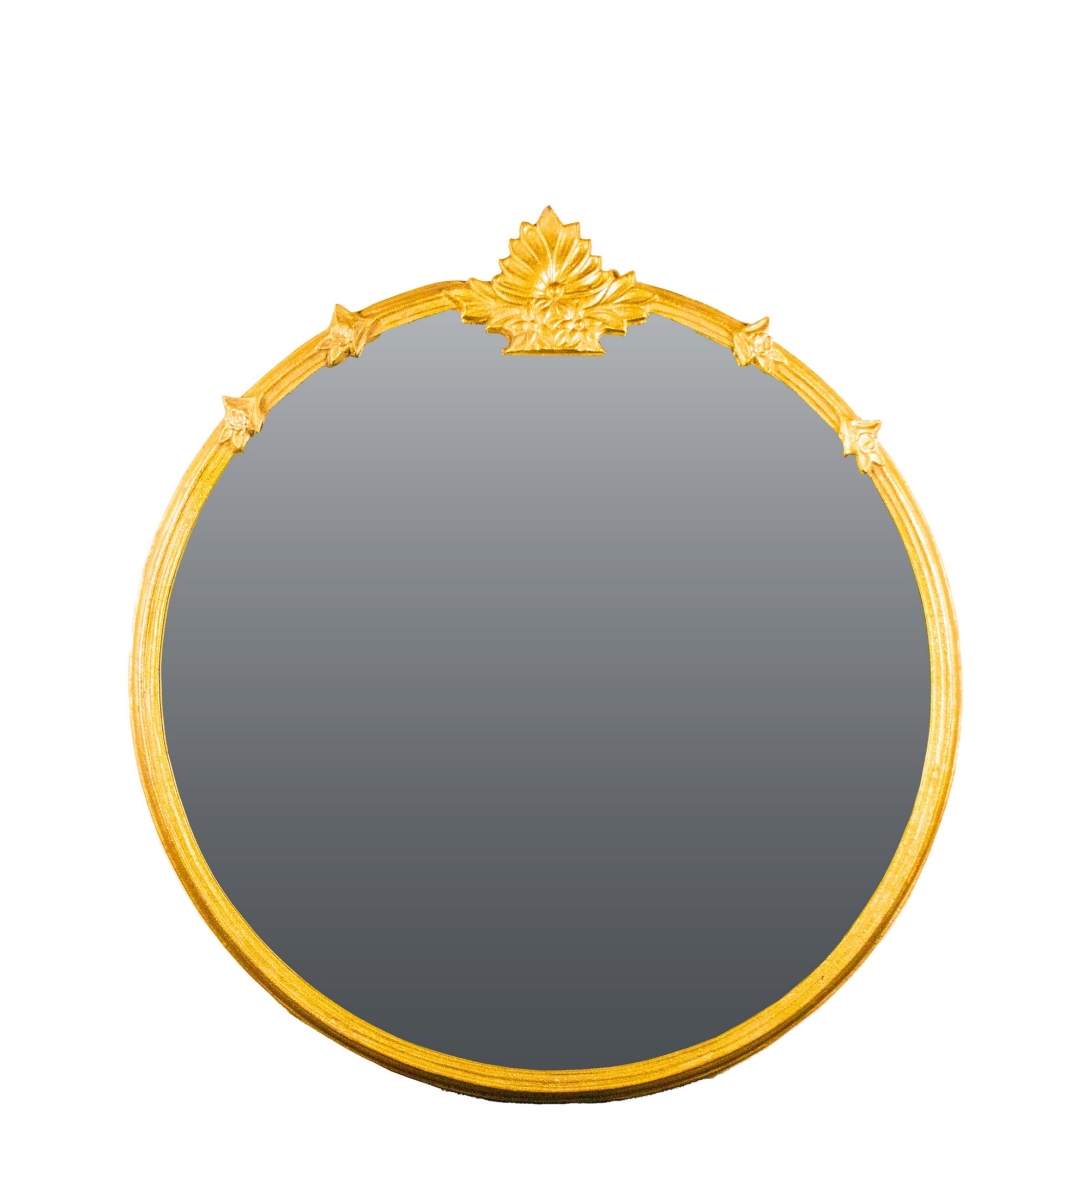 Picture of Privilege 60213 Aluminum Mirror with Leaf Motif, Gold Leaf